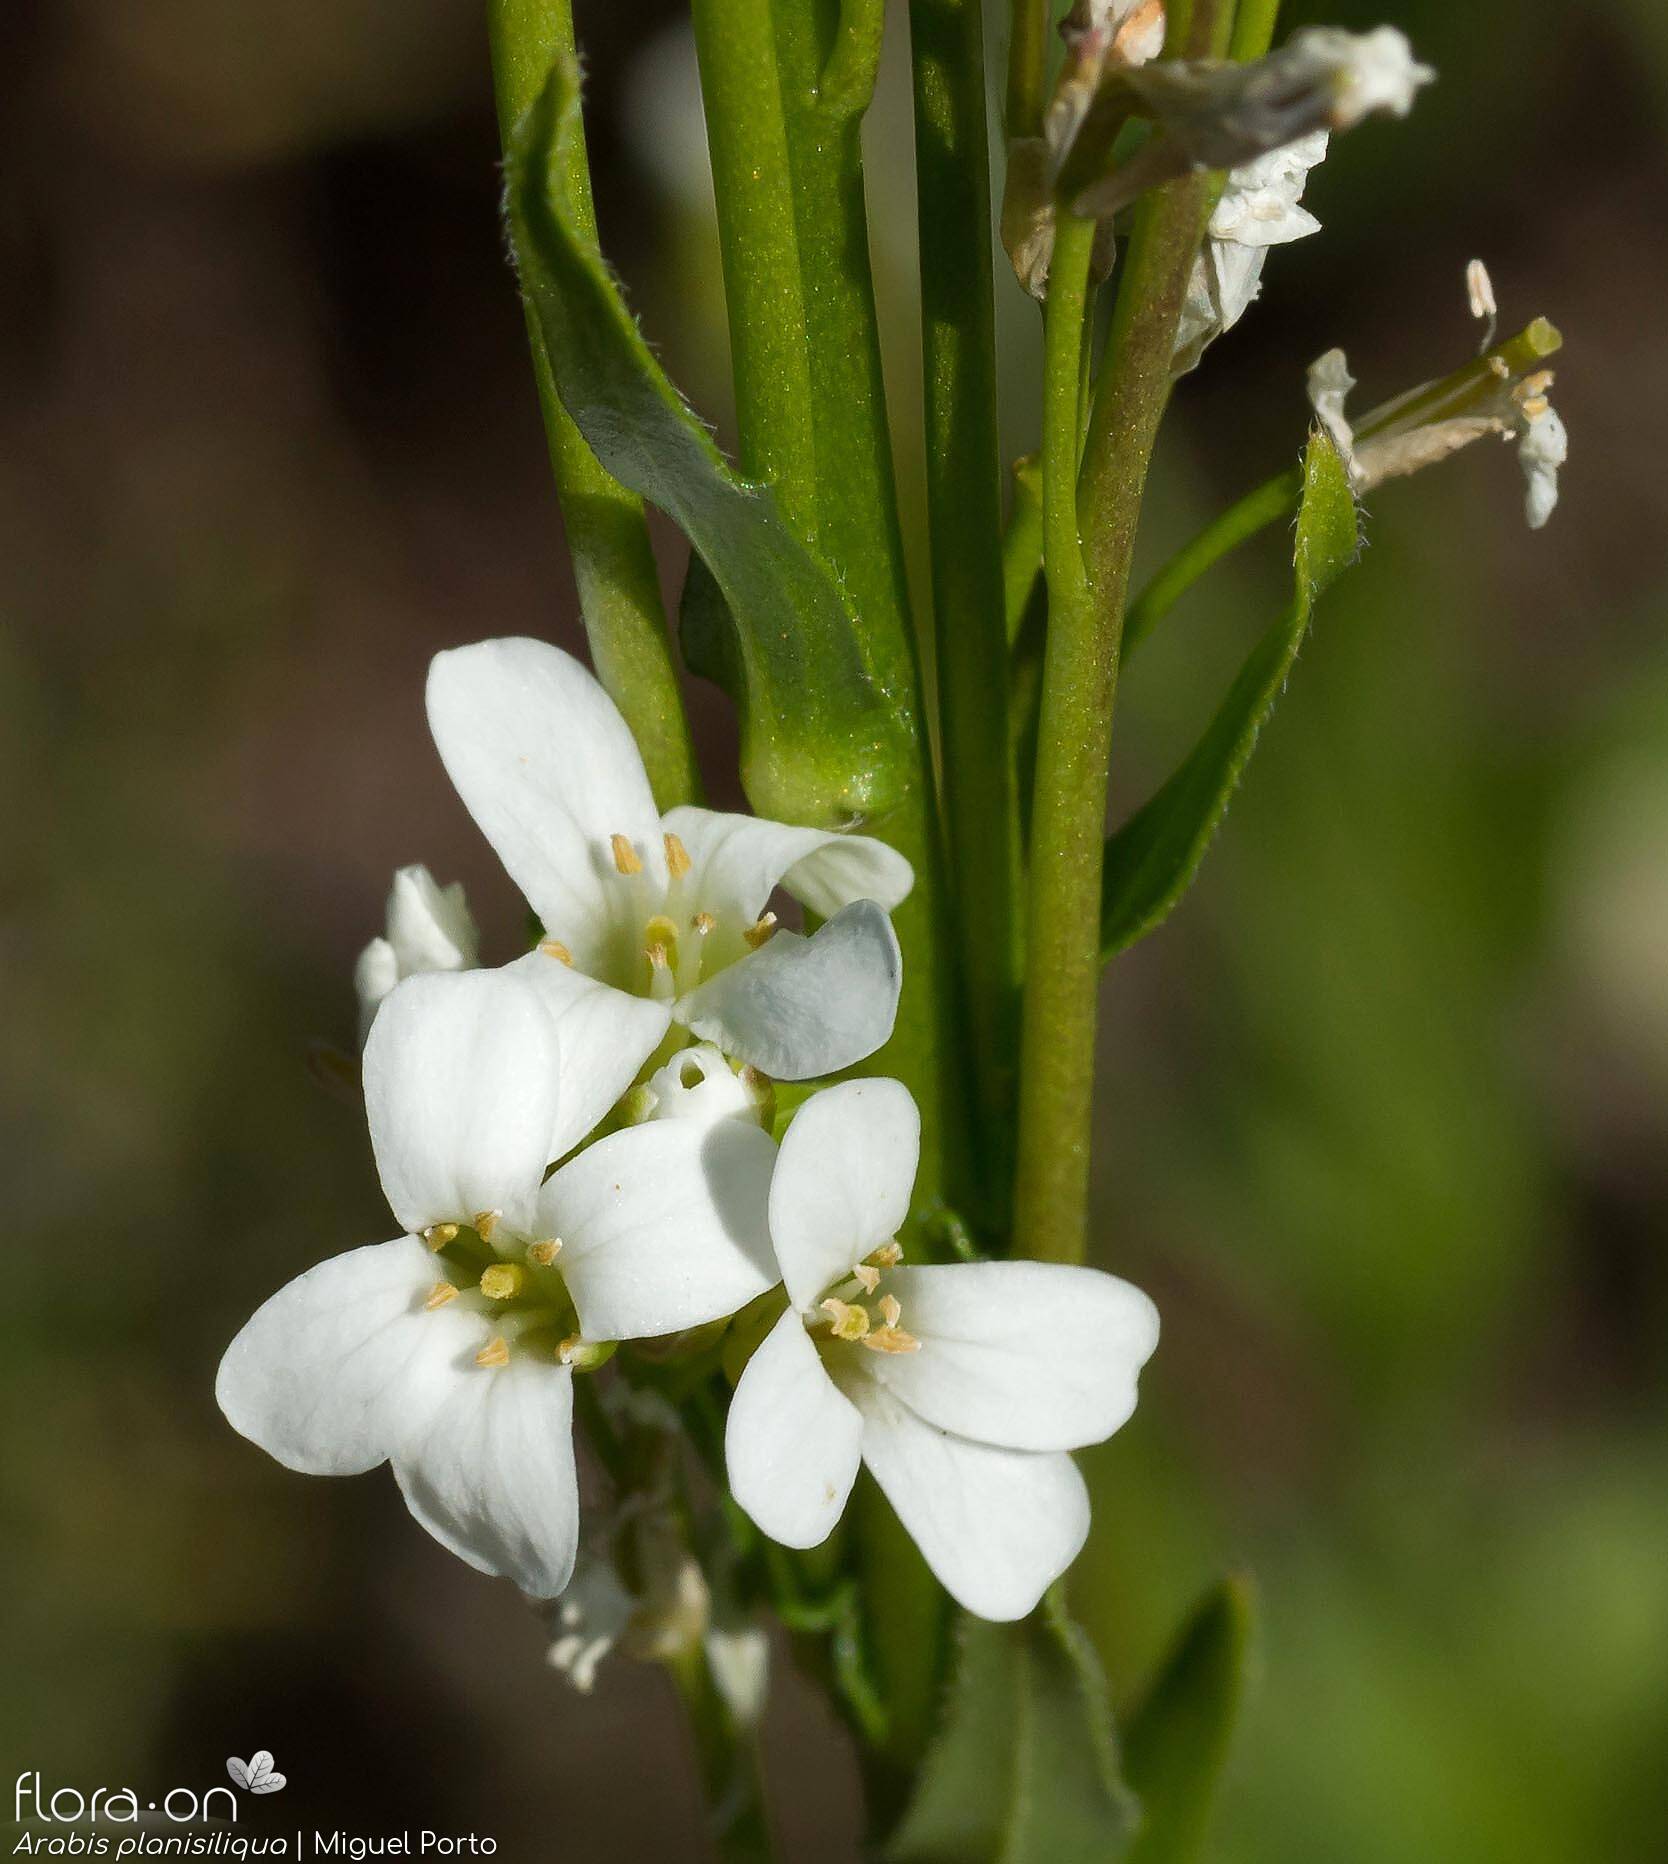 Arabis planisiliqua - Flor (close-up) | Miguel Porto; CC BY-NC 4.0